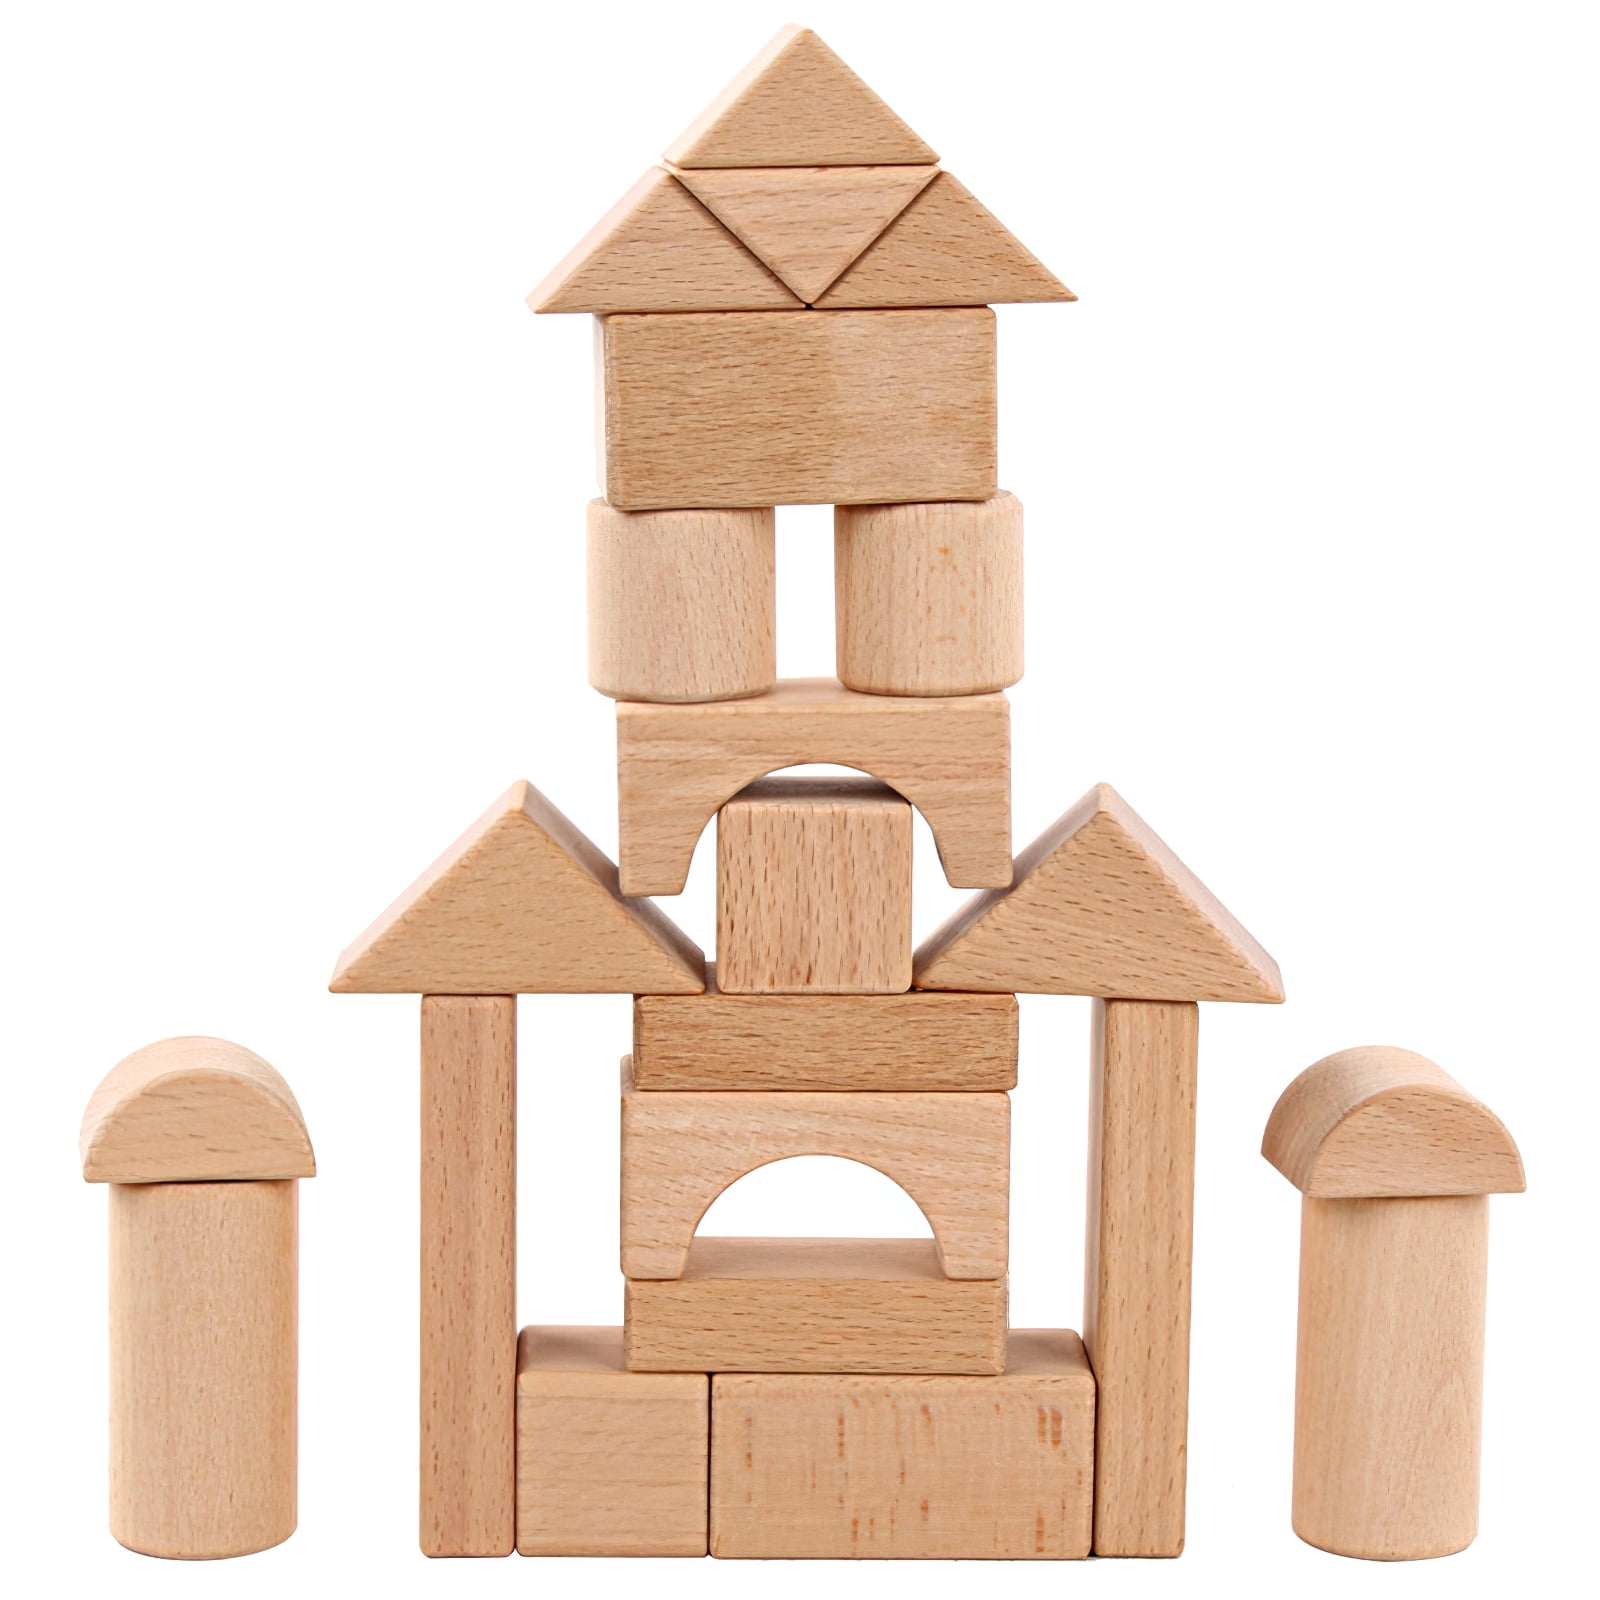 Wooden Building Blocks 100 Piece Set Natural Color Boys Girls Toys Wood Kids